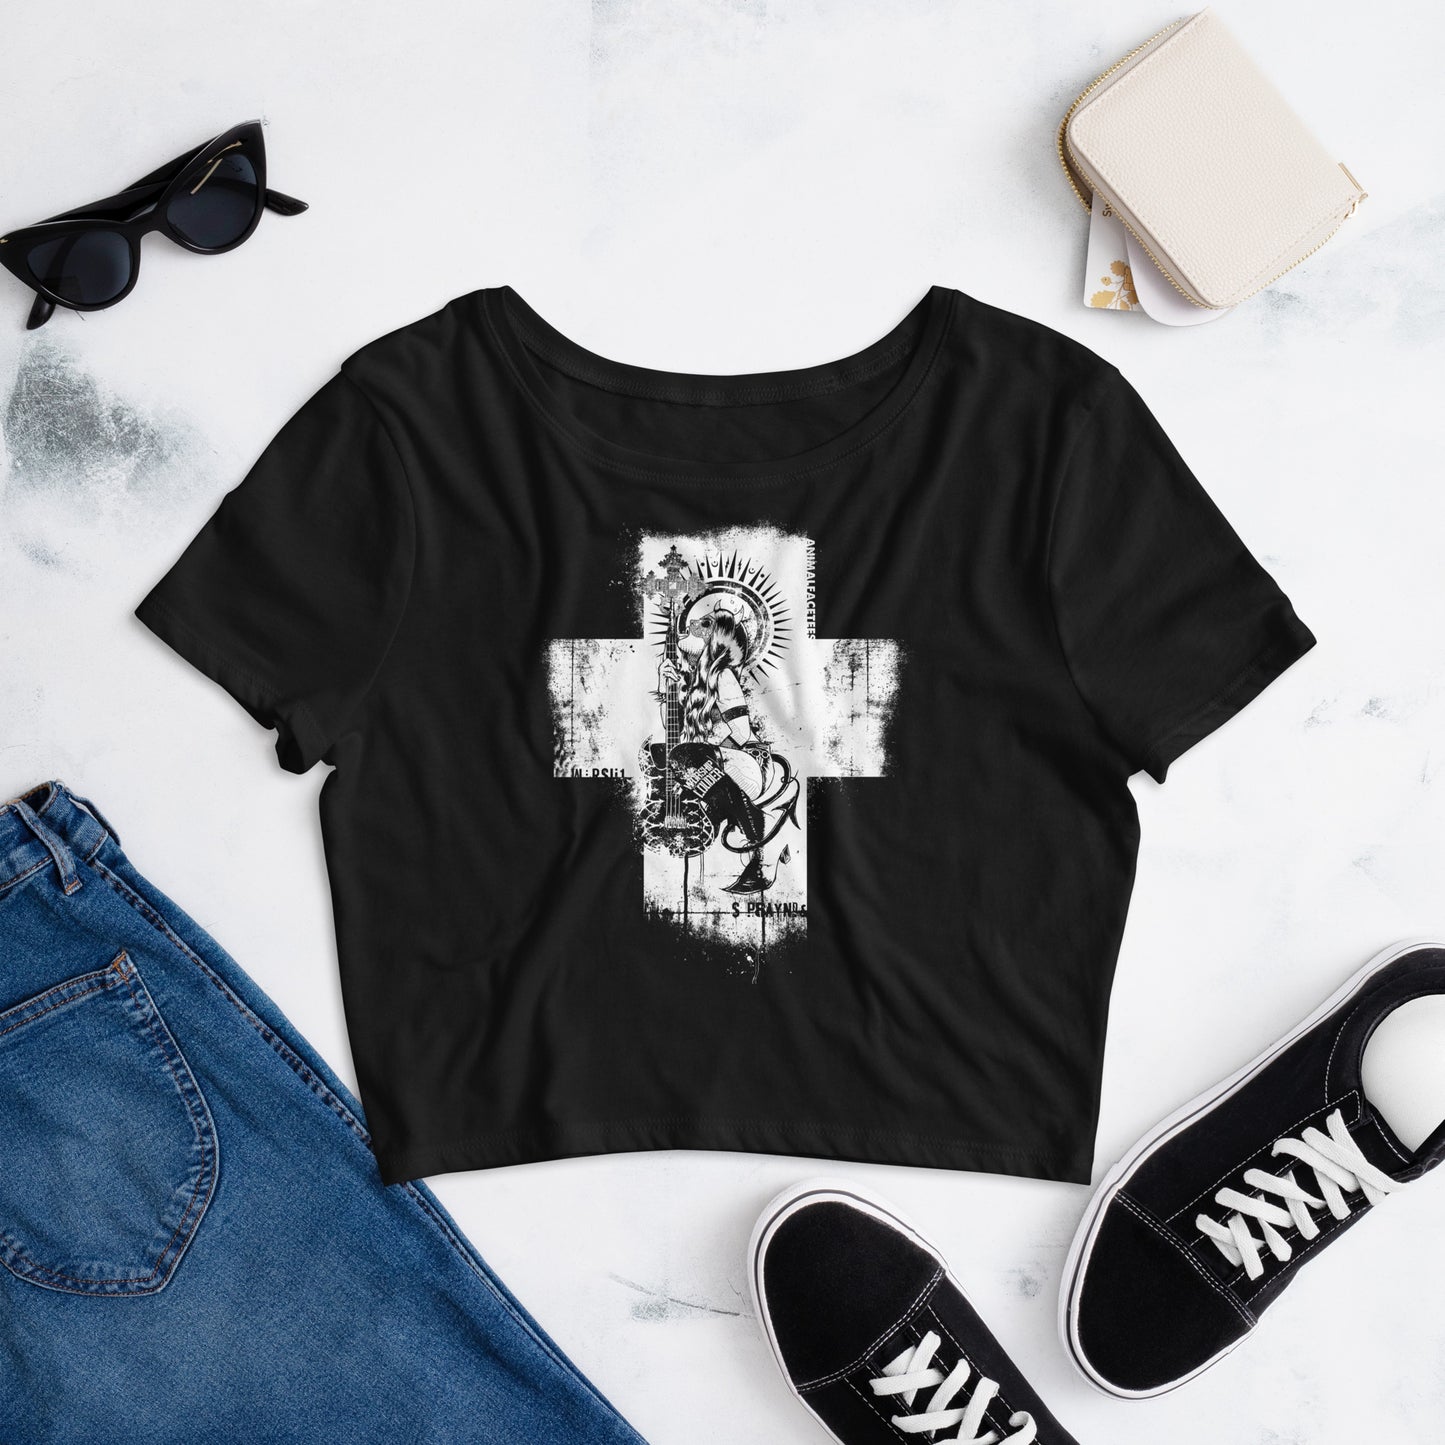 Guitar Graphic Crop Tee, Crust Punk Shirt, Music Crop Top, Street Wear, Heavy Metal Tee